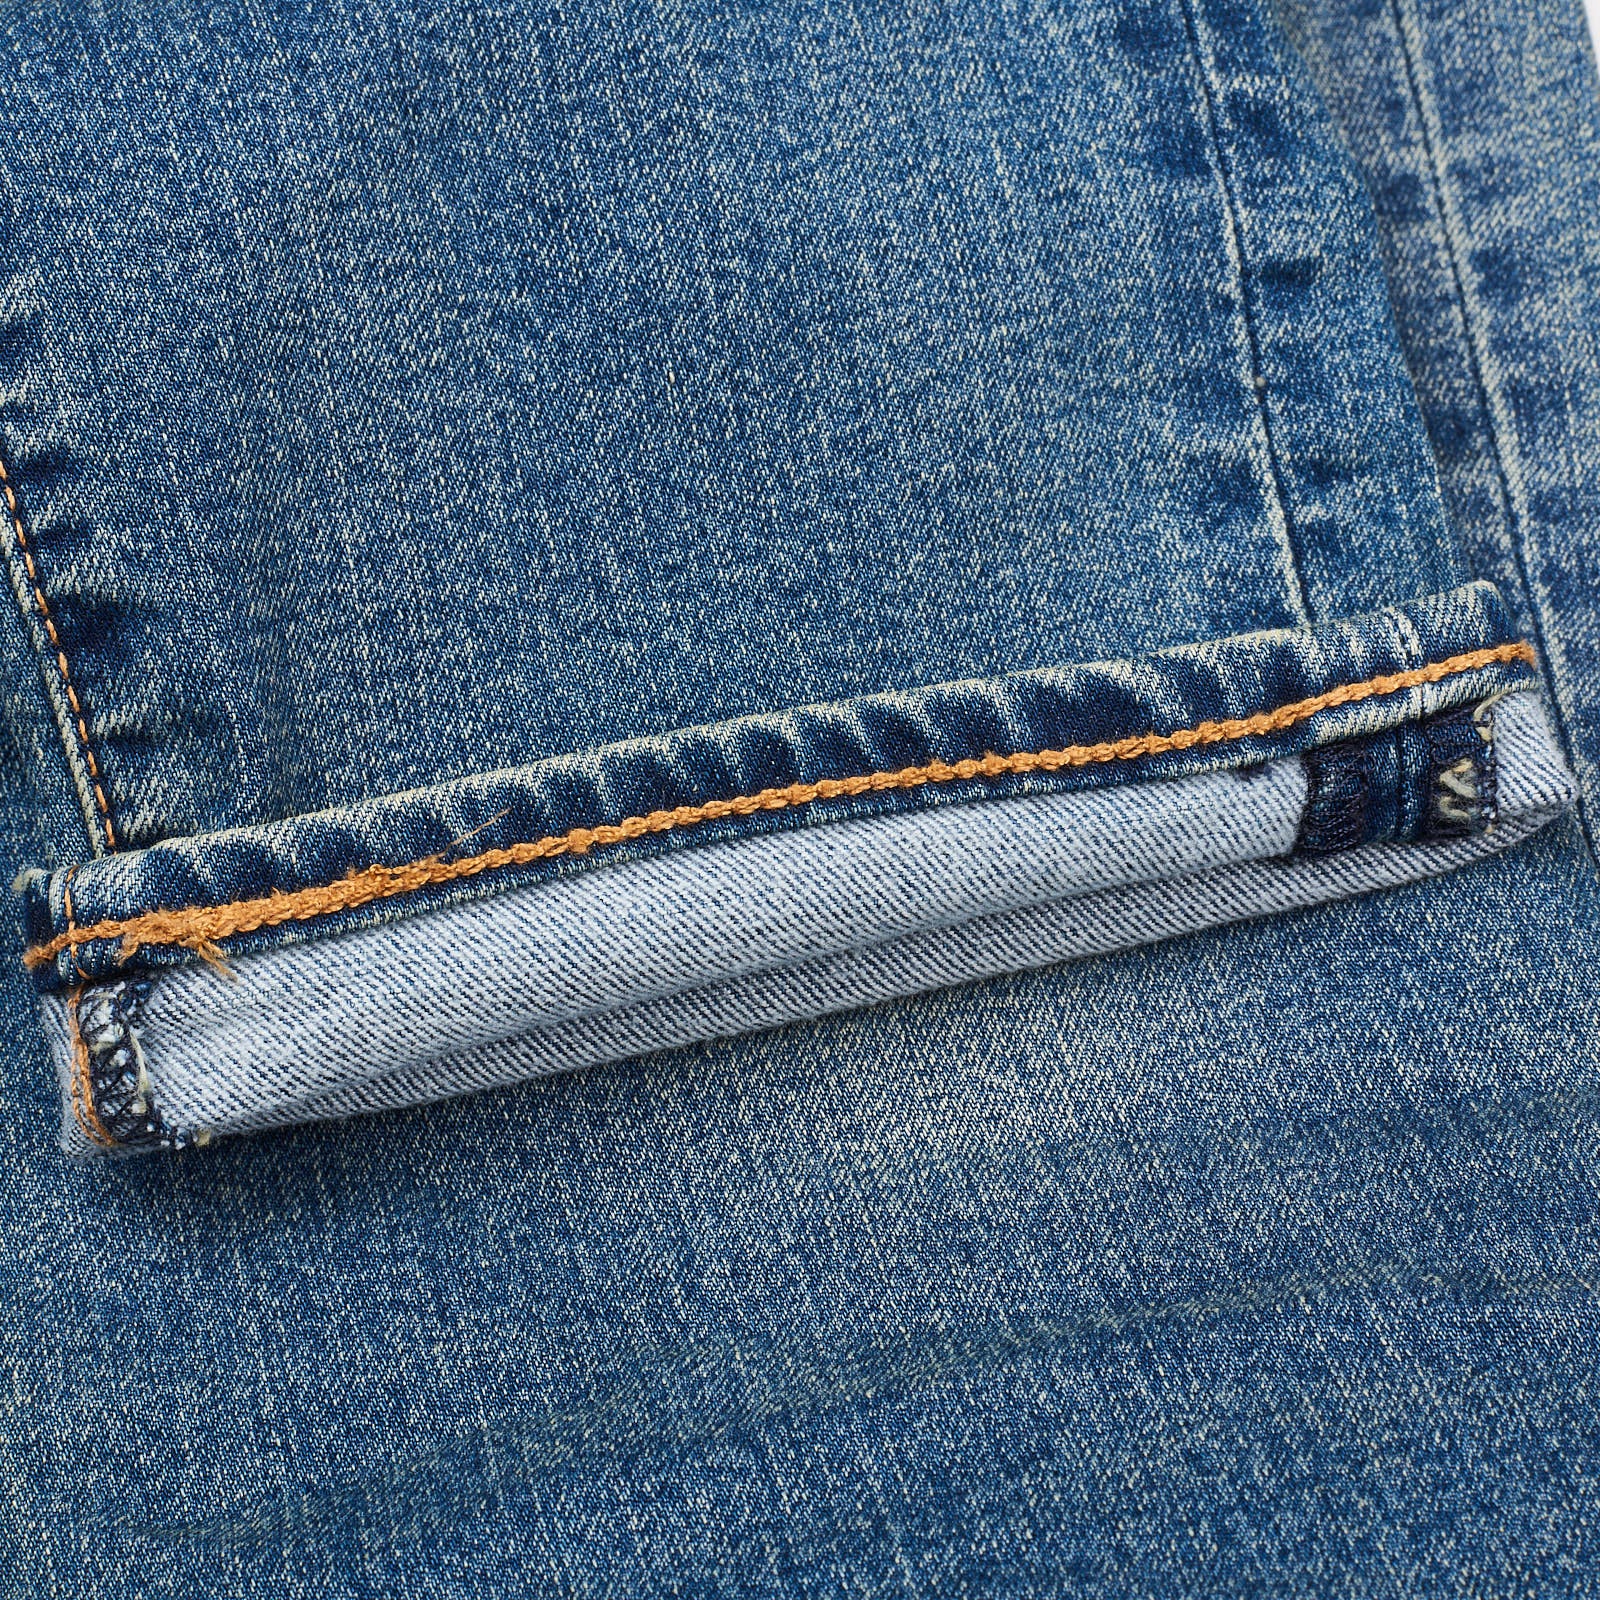 LEVI'S Premium 511 Slim Fit Warm Big E Repreve Denim Jeans NEW W28 L32